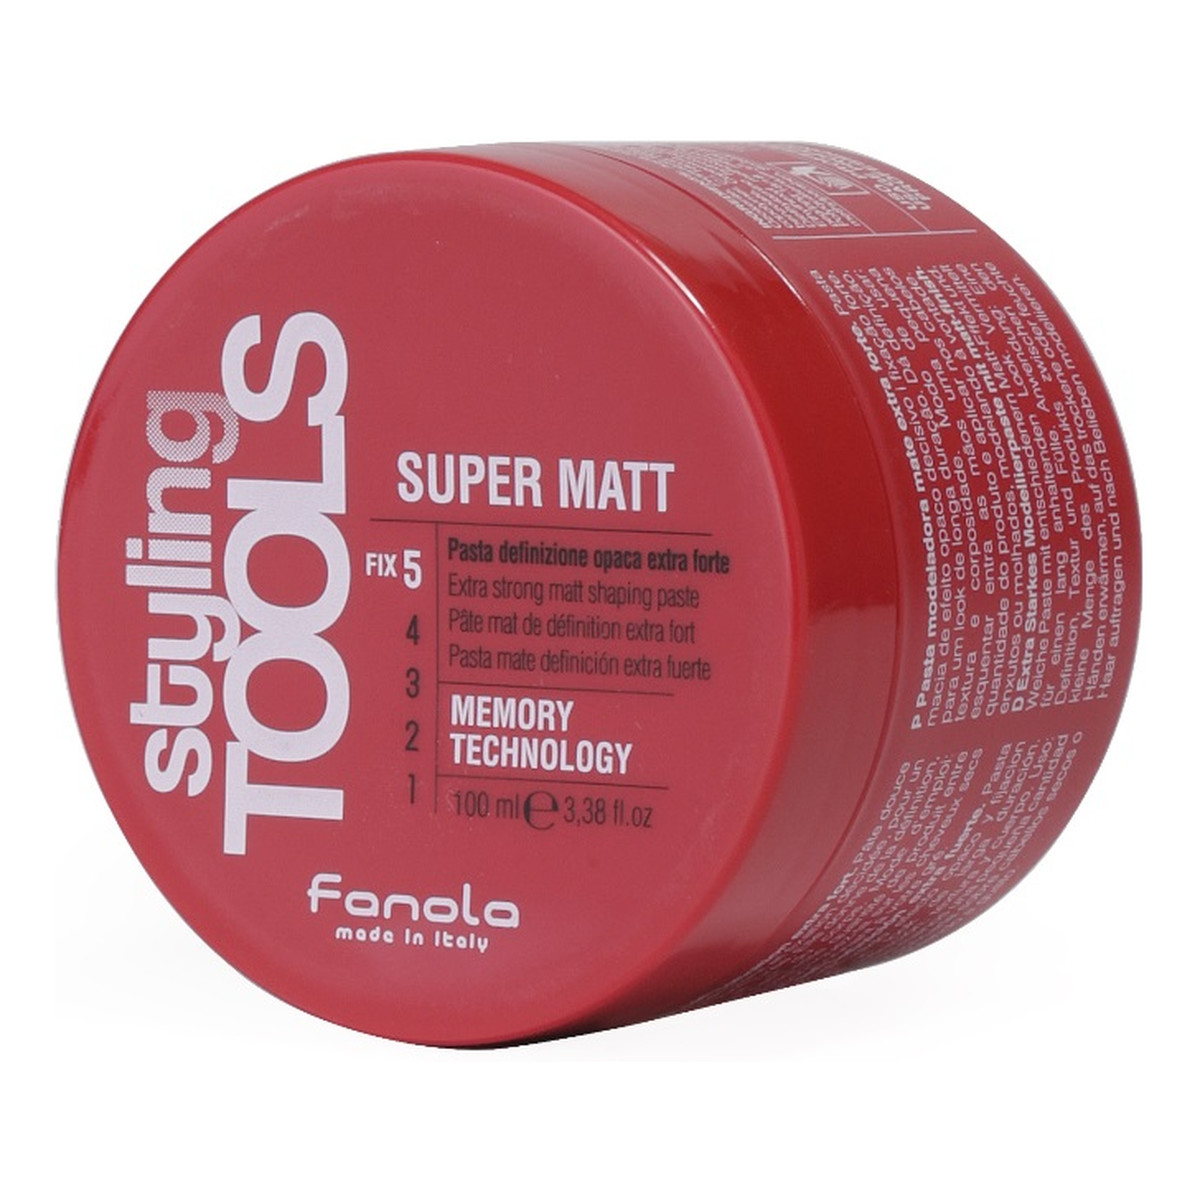 Fanola Styling tools super mat matująca pasta do włosów 100ml